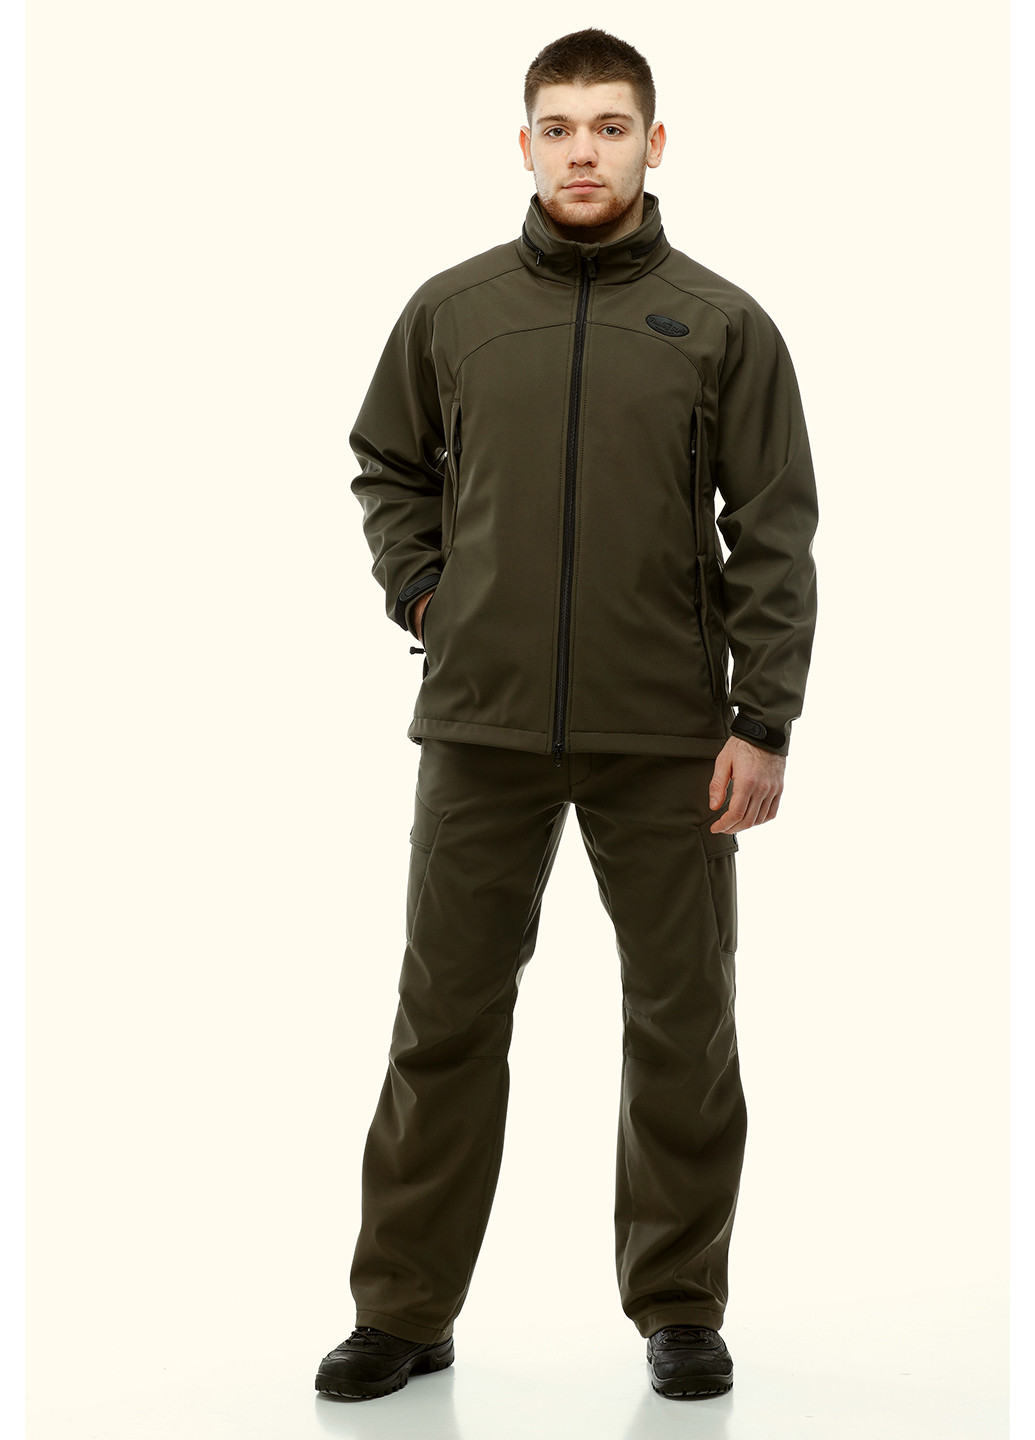 Оливковый (хаки) демисезонный костюм (куртка, брюки) брючный Fishing Style